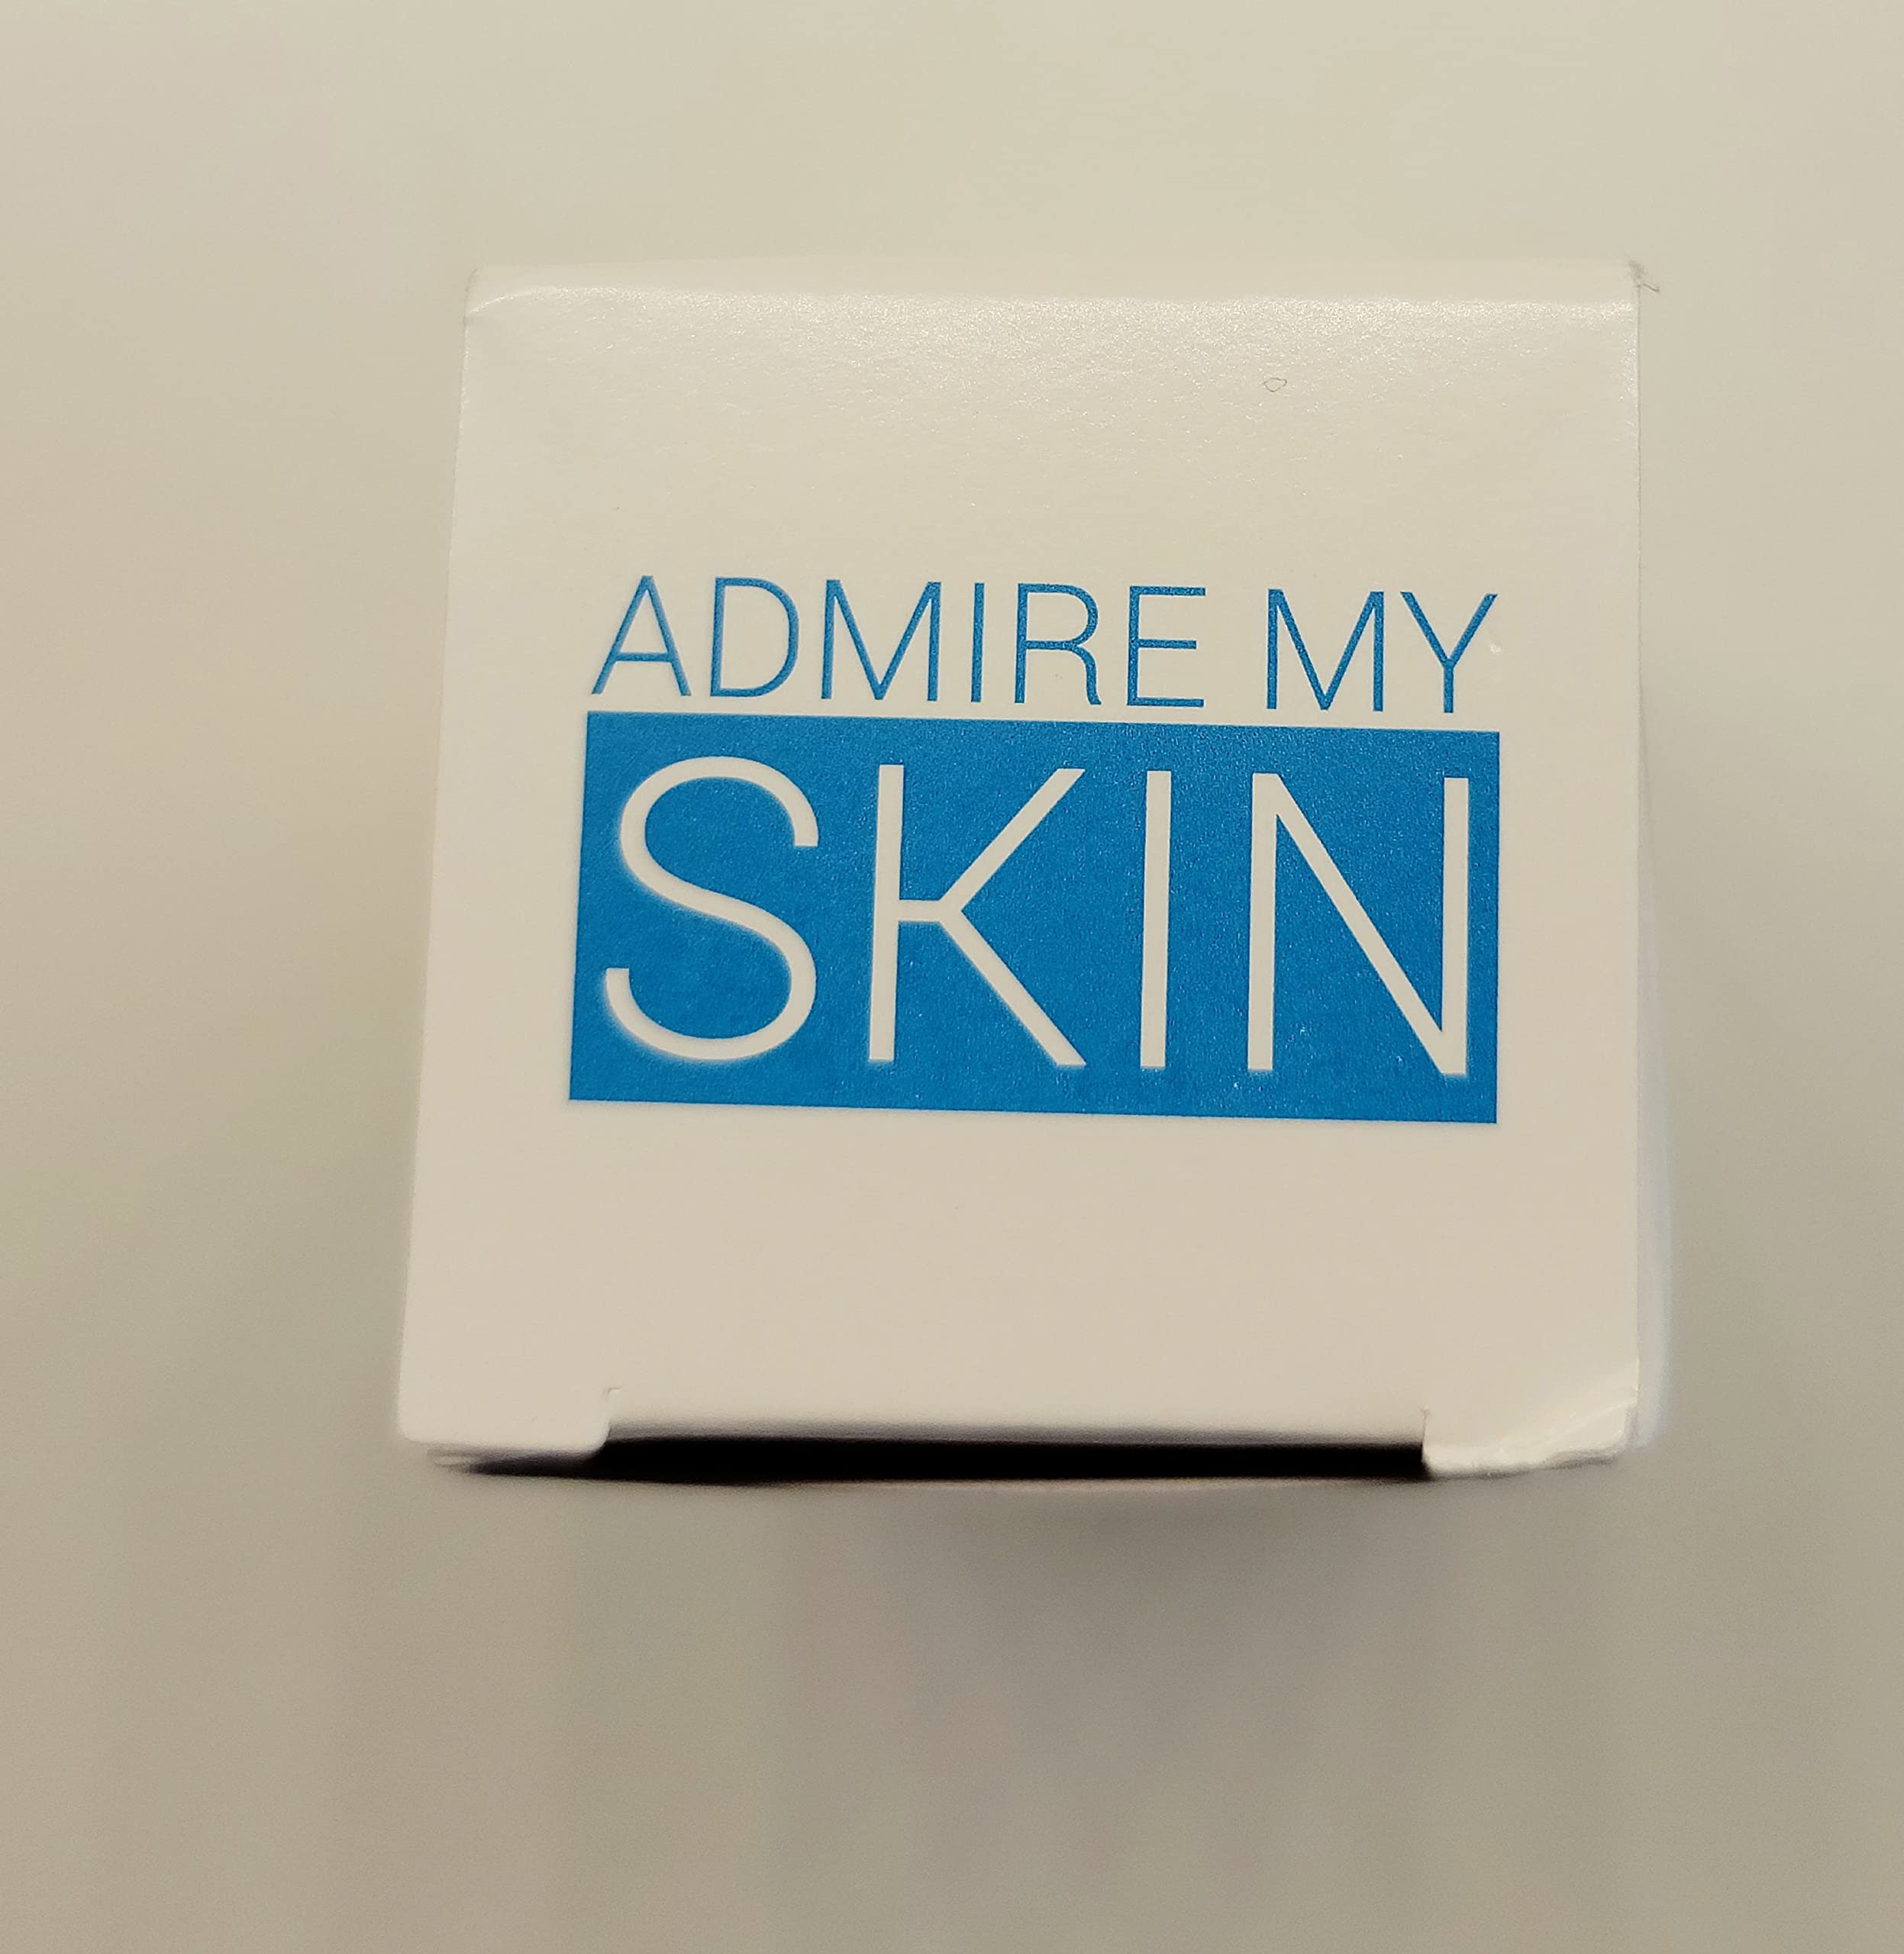 Admire My Skin Dark Spot Corrector Remover for Face - Brightening Serum Fade Cream - Melasma Treatment Cream with Synovea, Kojic Acid, Vitamin C, Salicylic Acid, Azelaic Acid, Lactic Acid Serum Peel